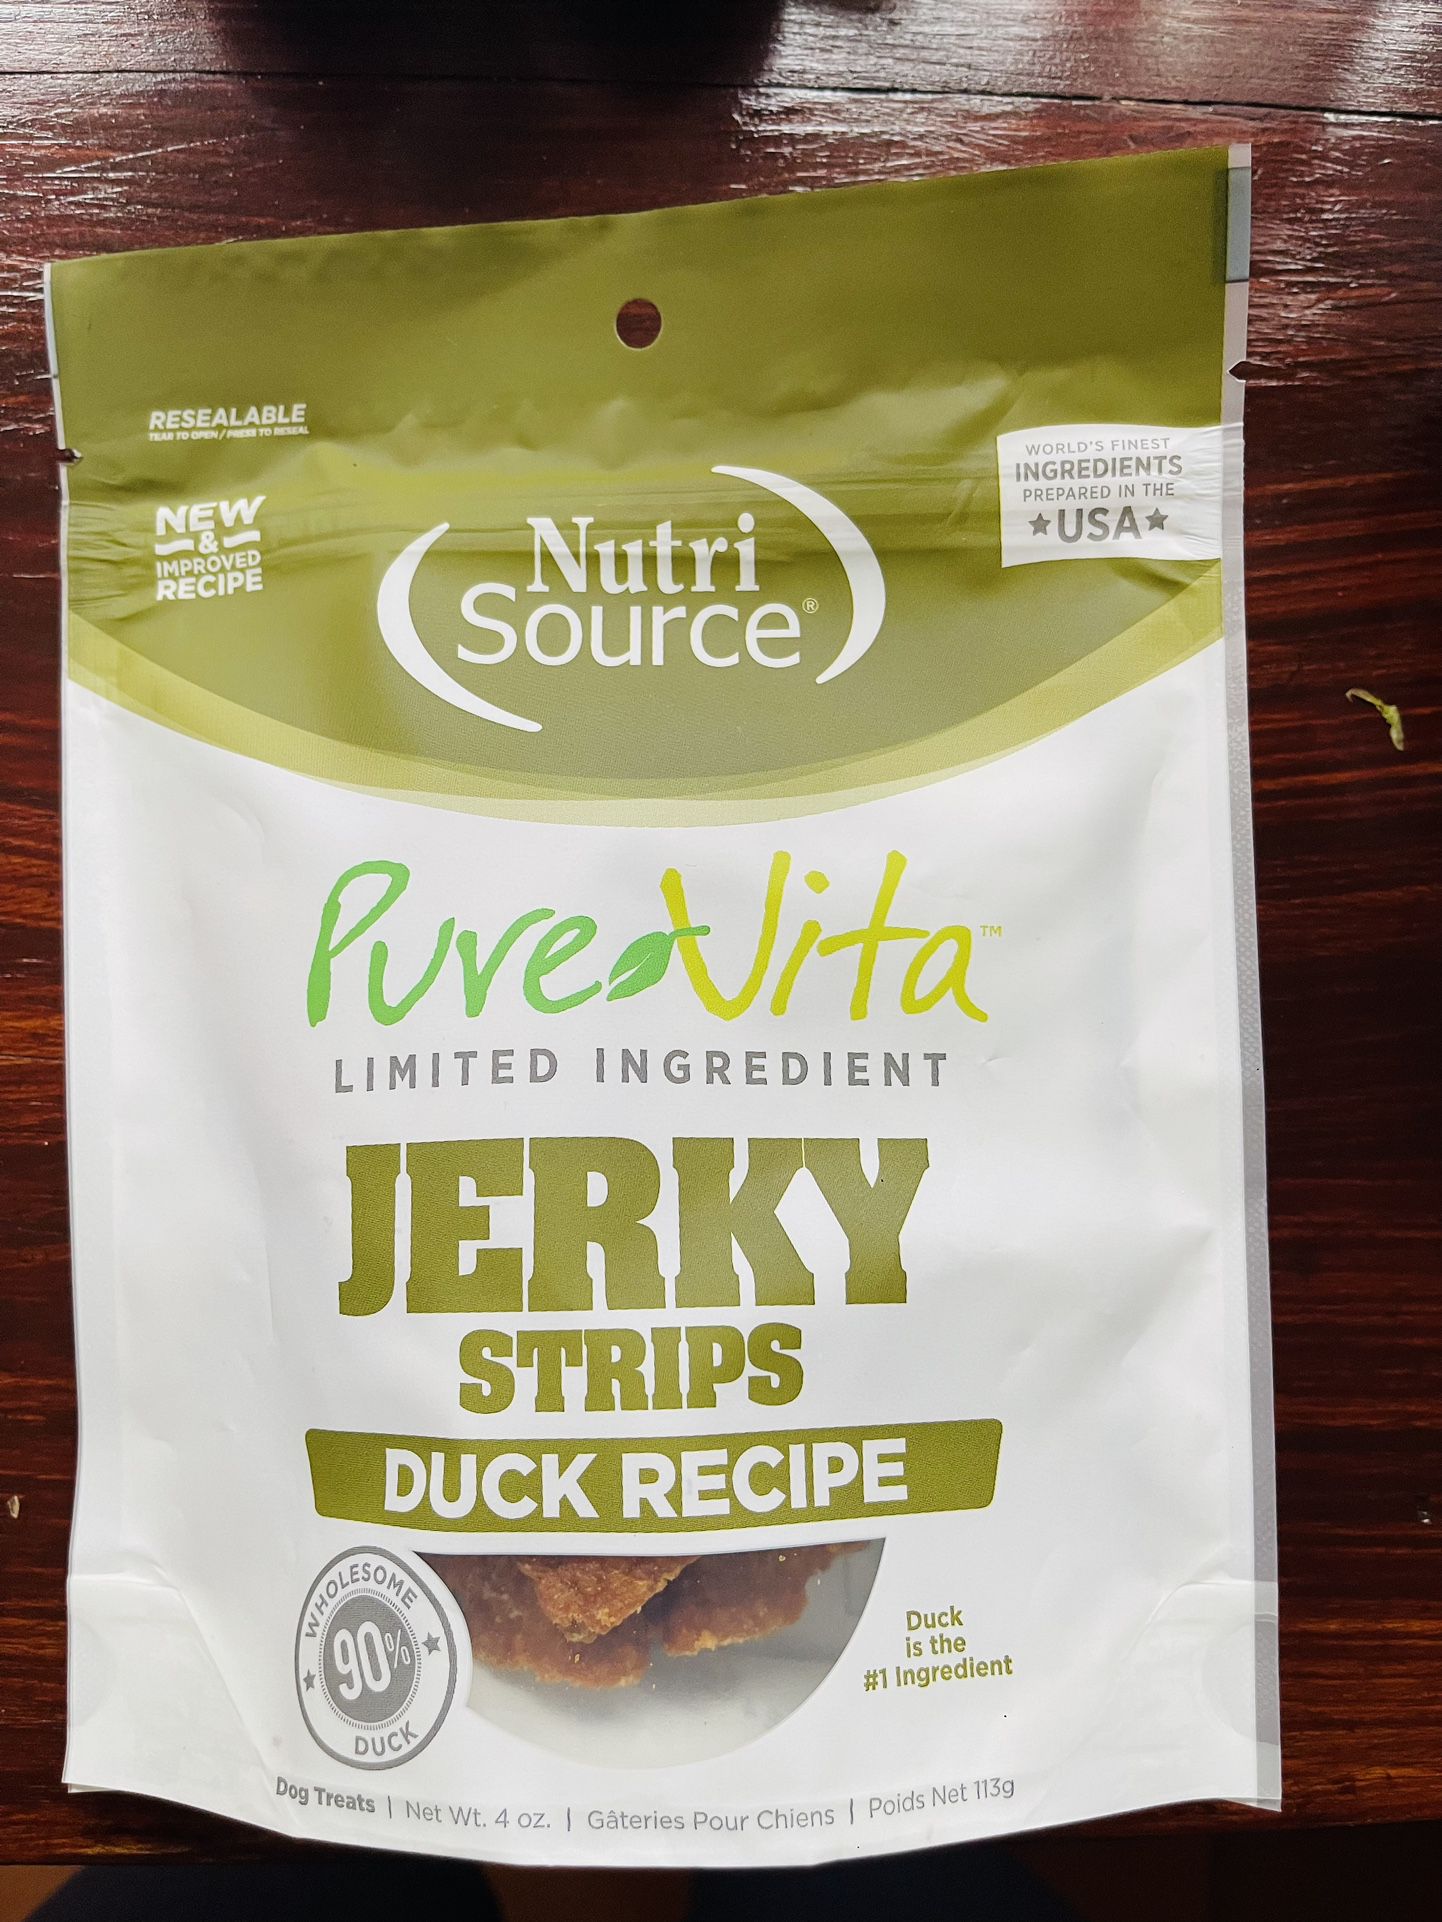 Nutri Source brand New Jerky stripes Duck